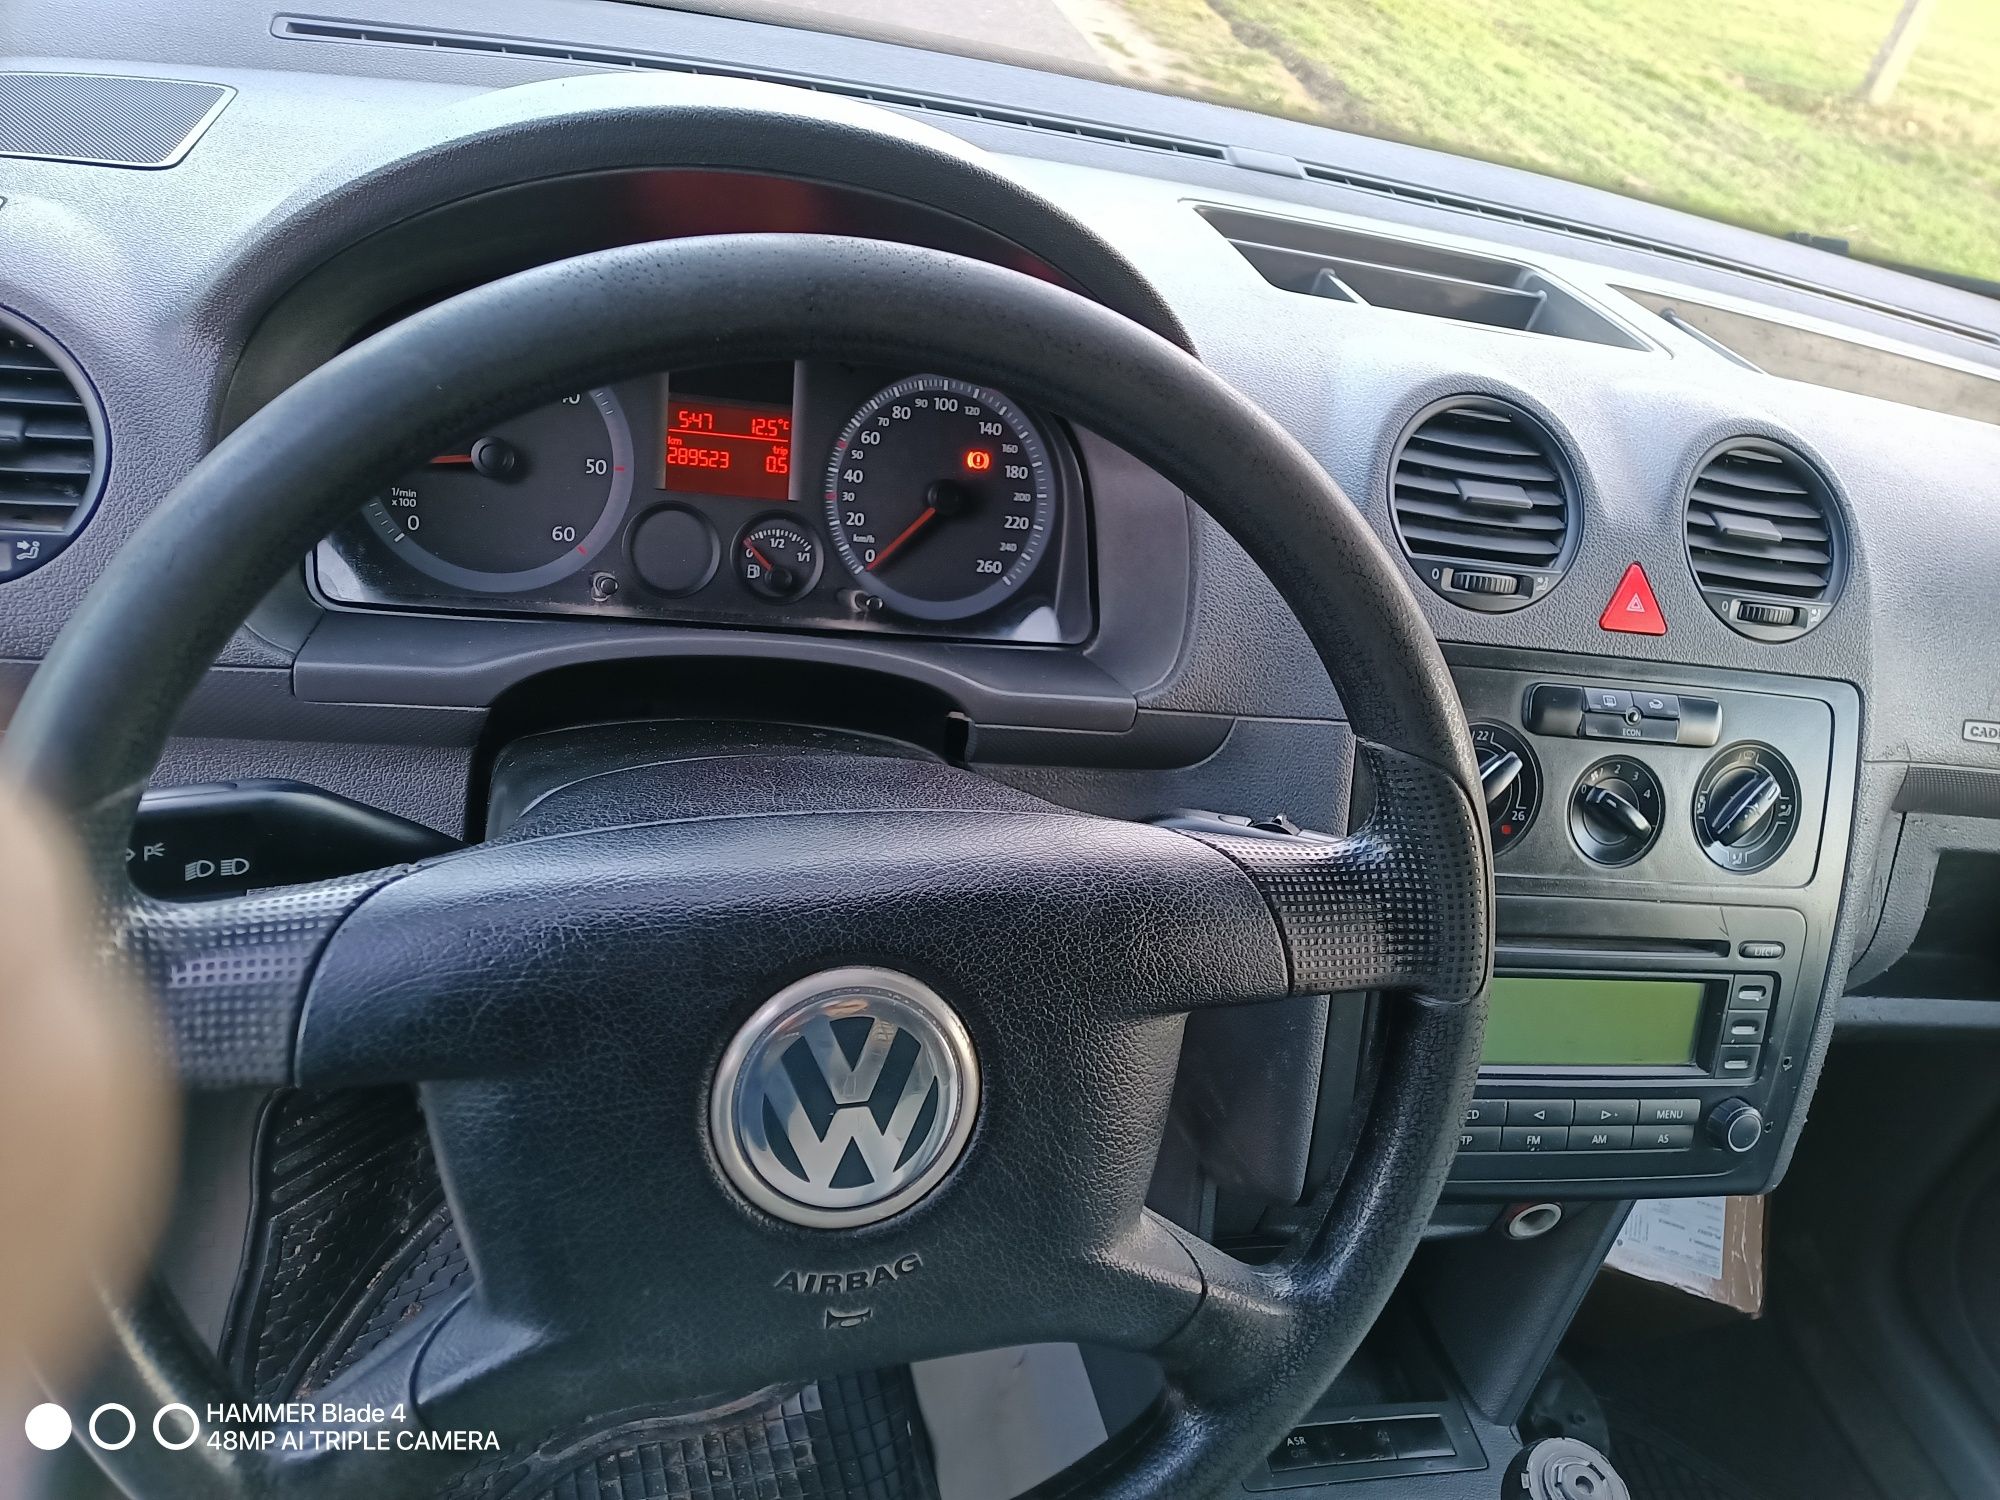 Volkswagen ceddy 1.9 tdi klima